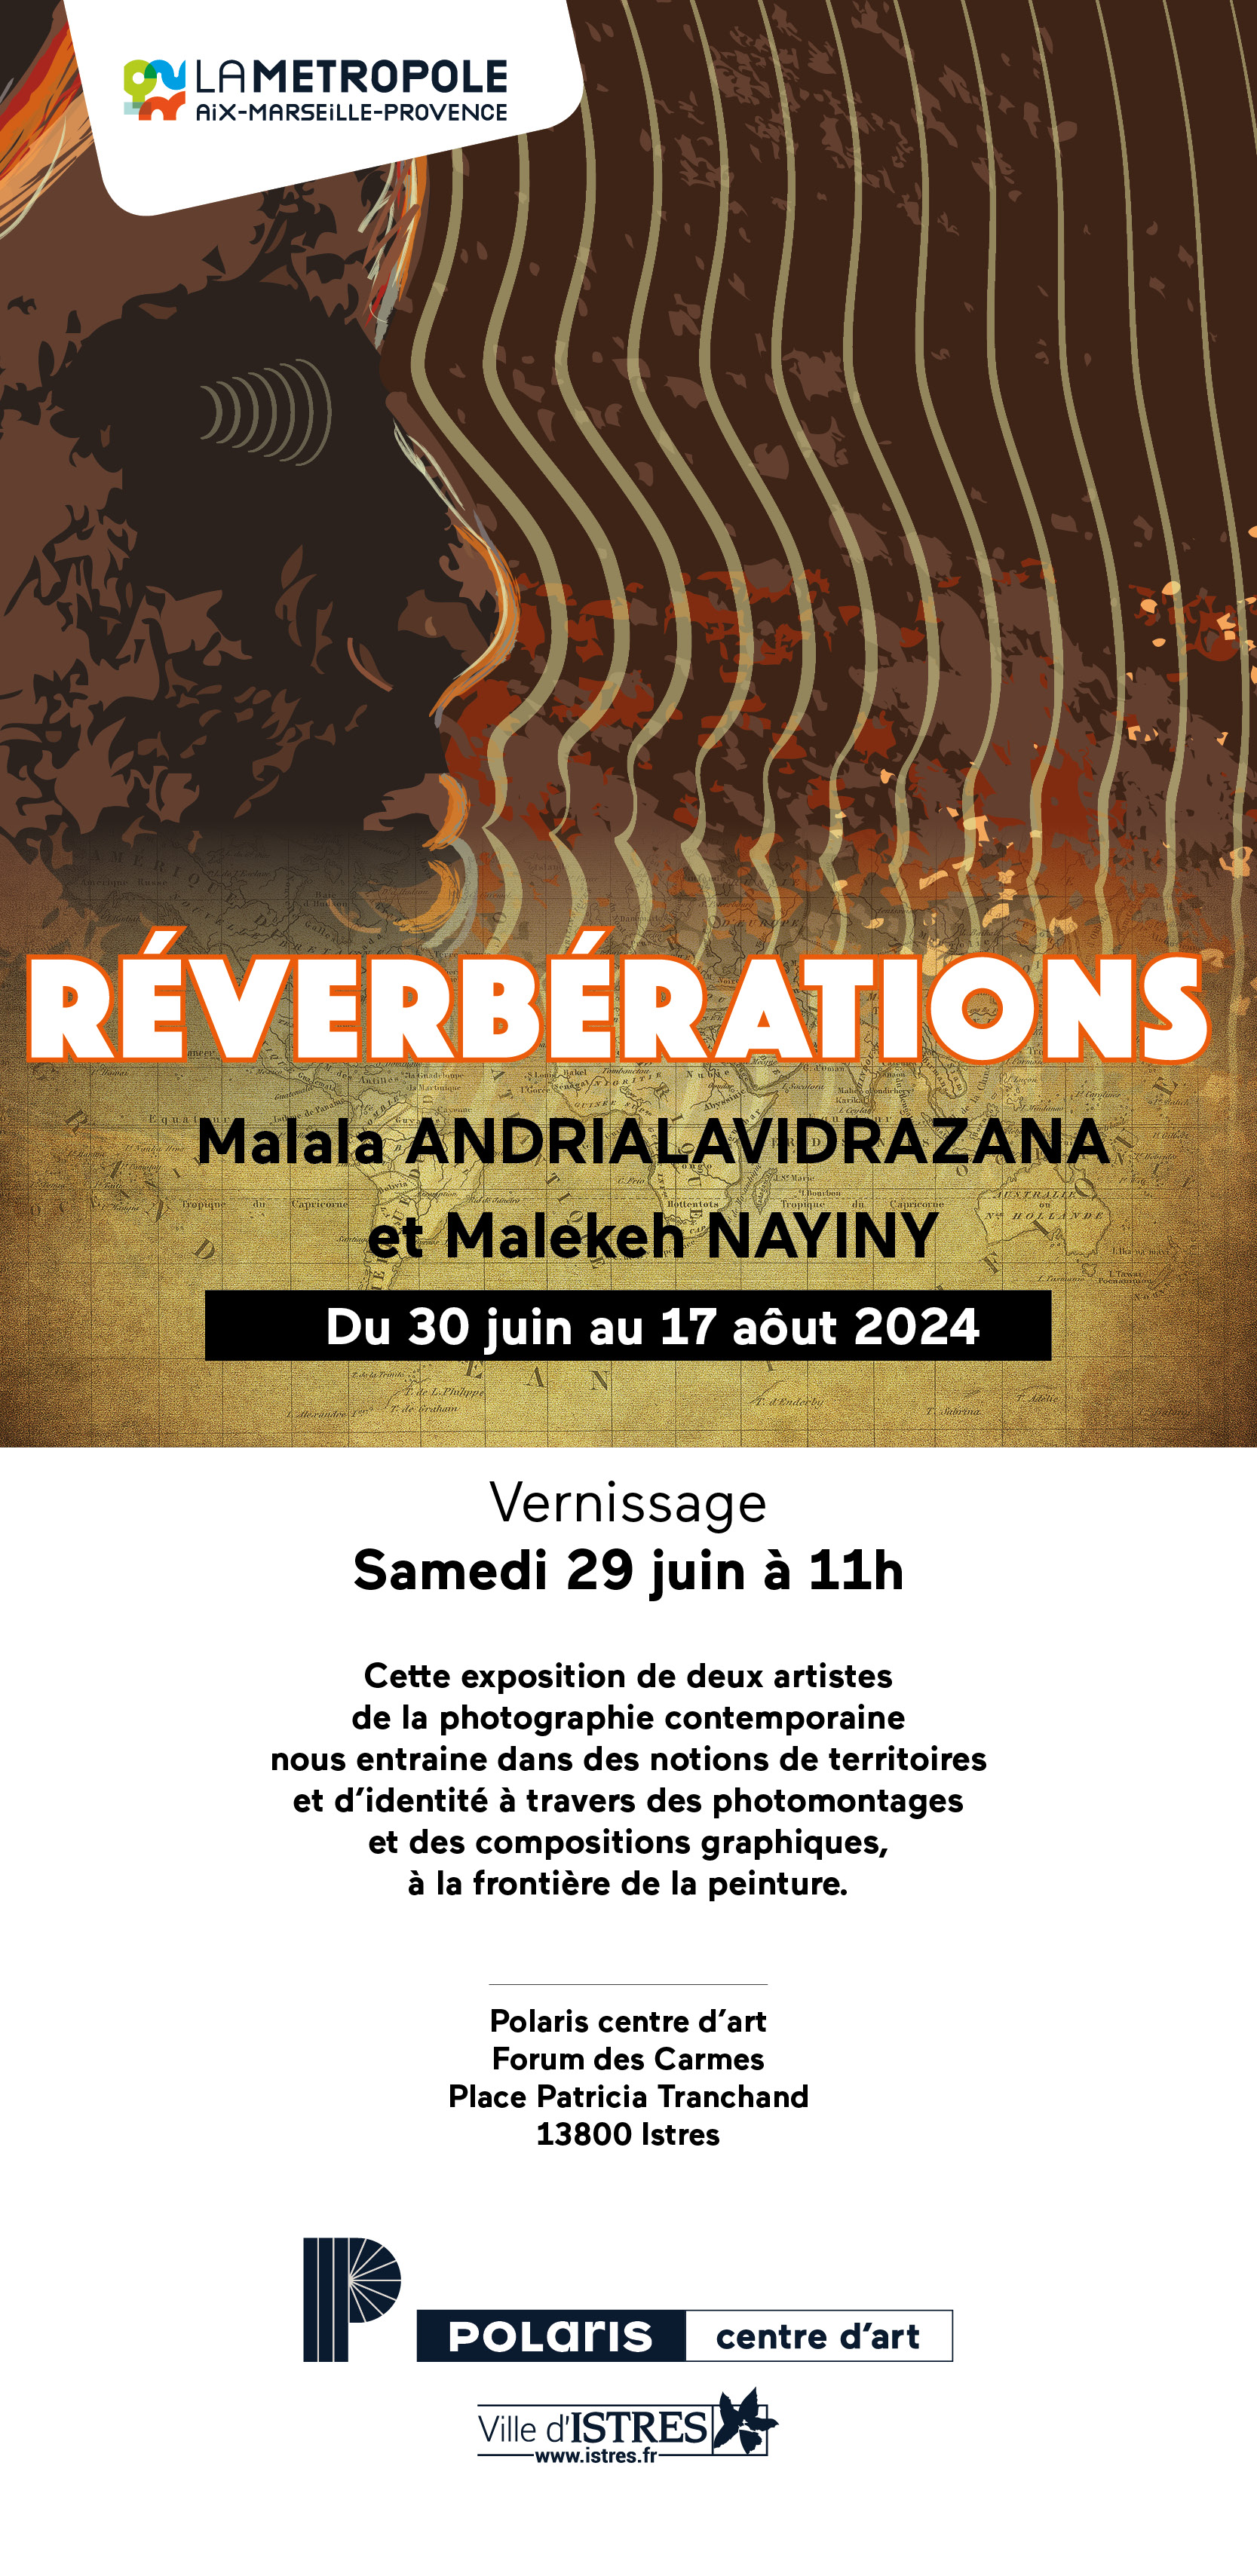 Exposition Réverbérations : Malala Andrialavidrazana et Malekeh Nayiny